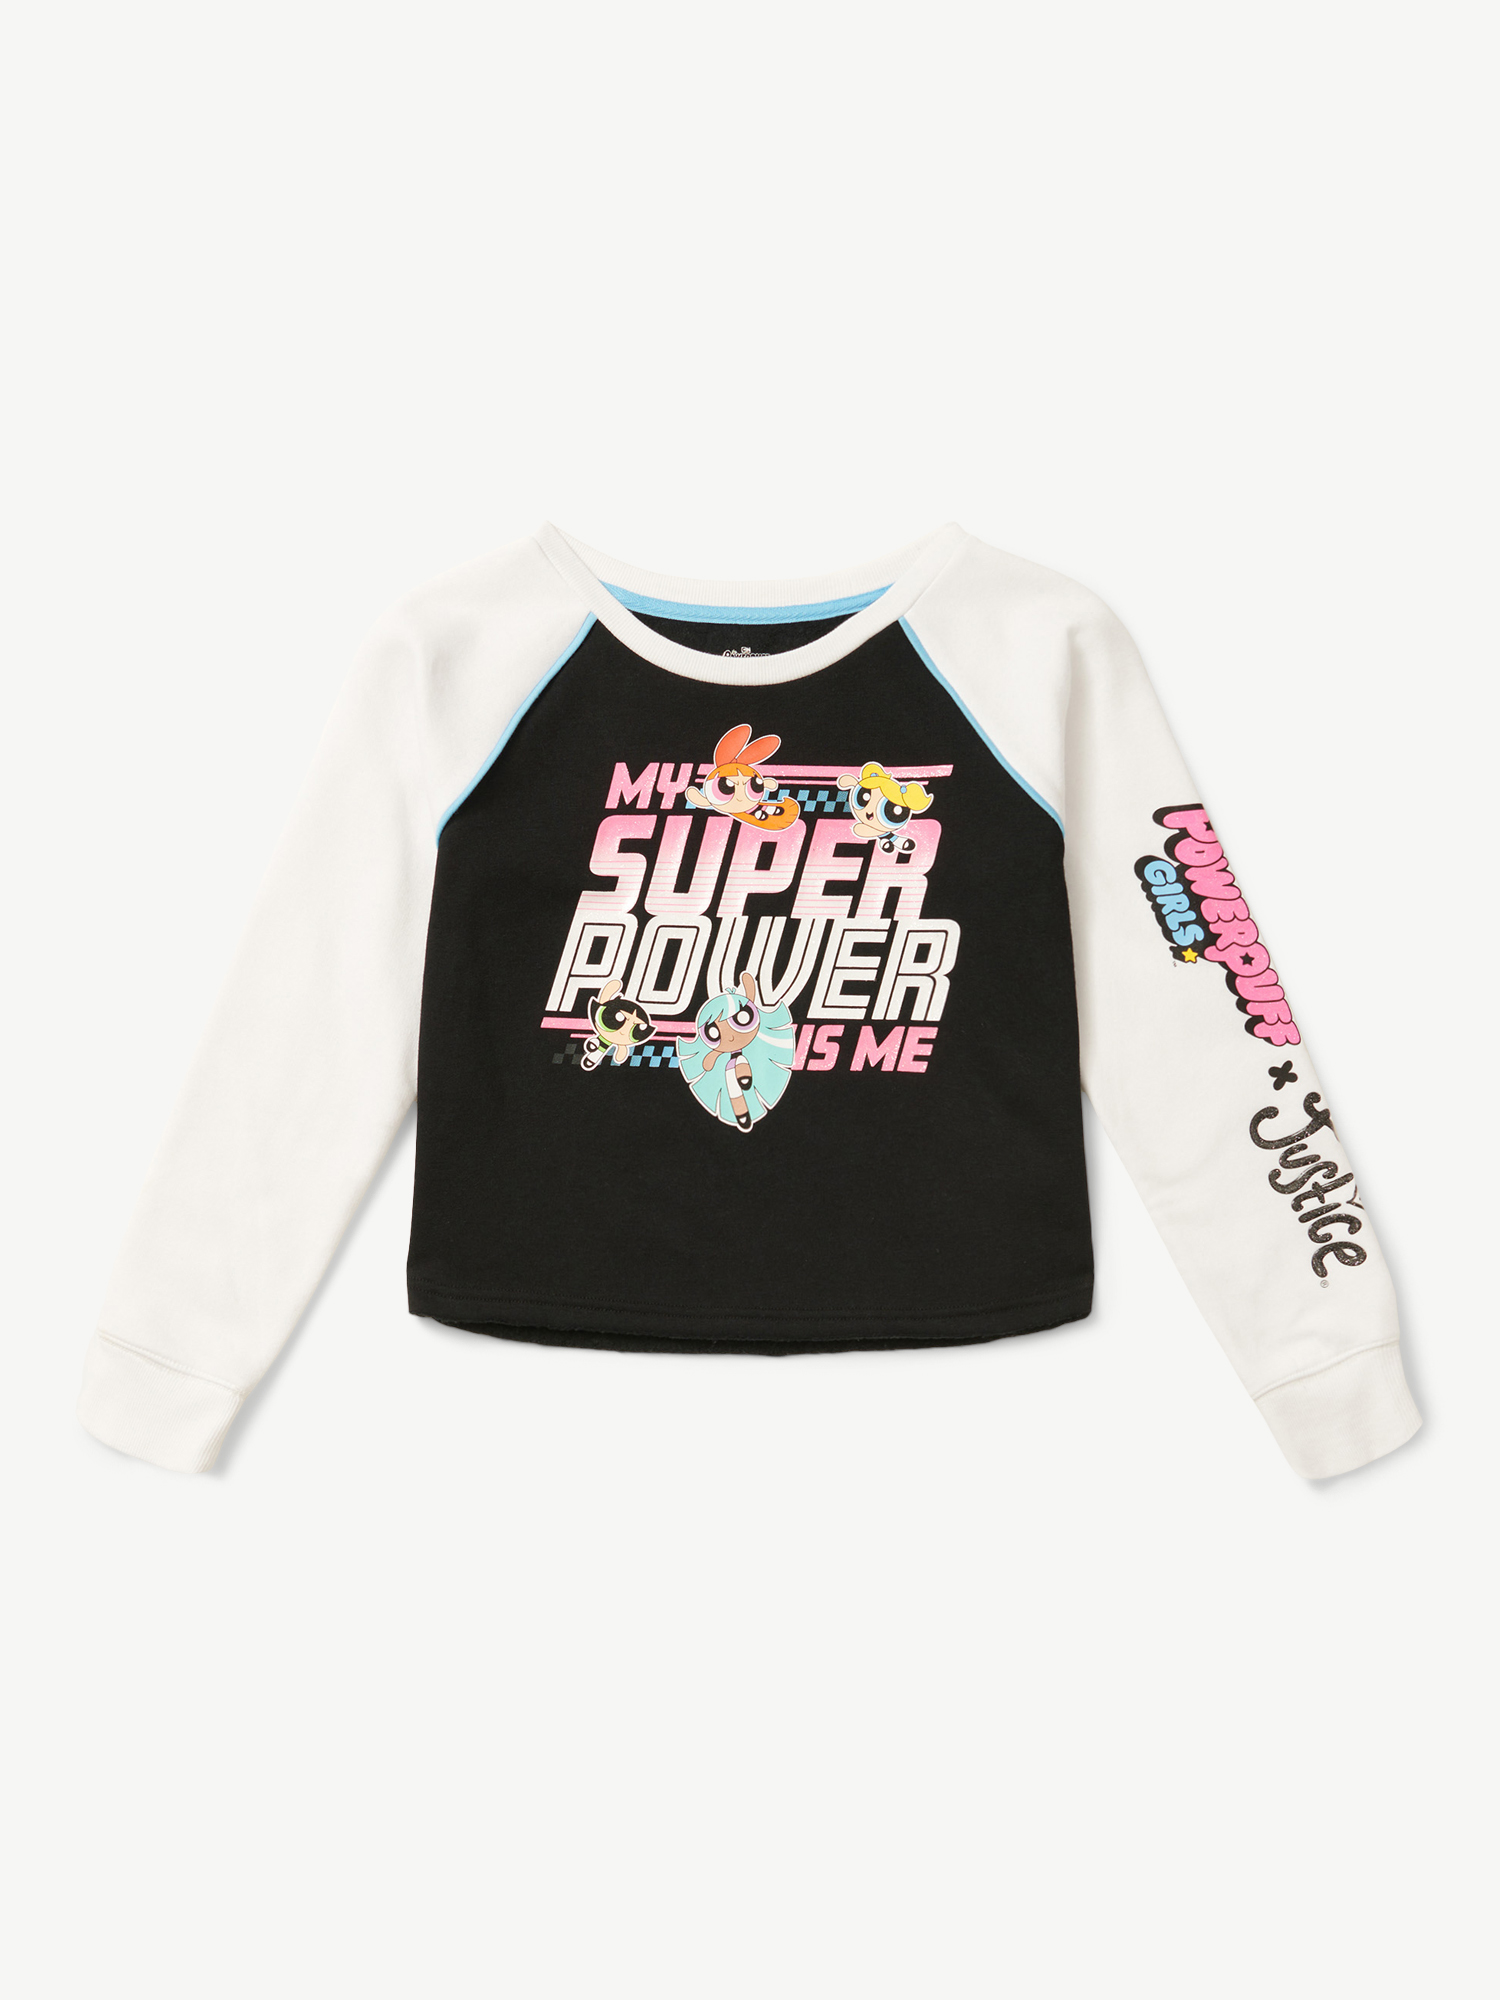 Justice x Powerpuff Girls Sweatshirt, Sizes XS-XLP - Walmart.com